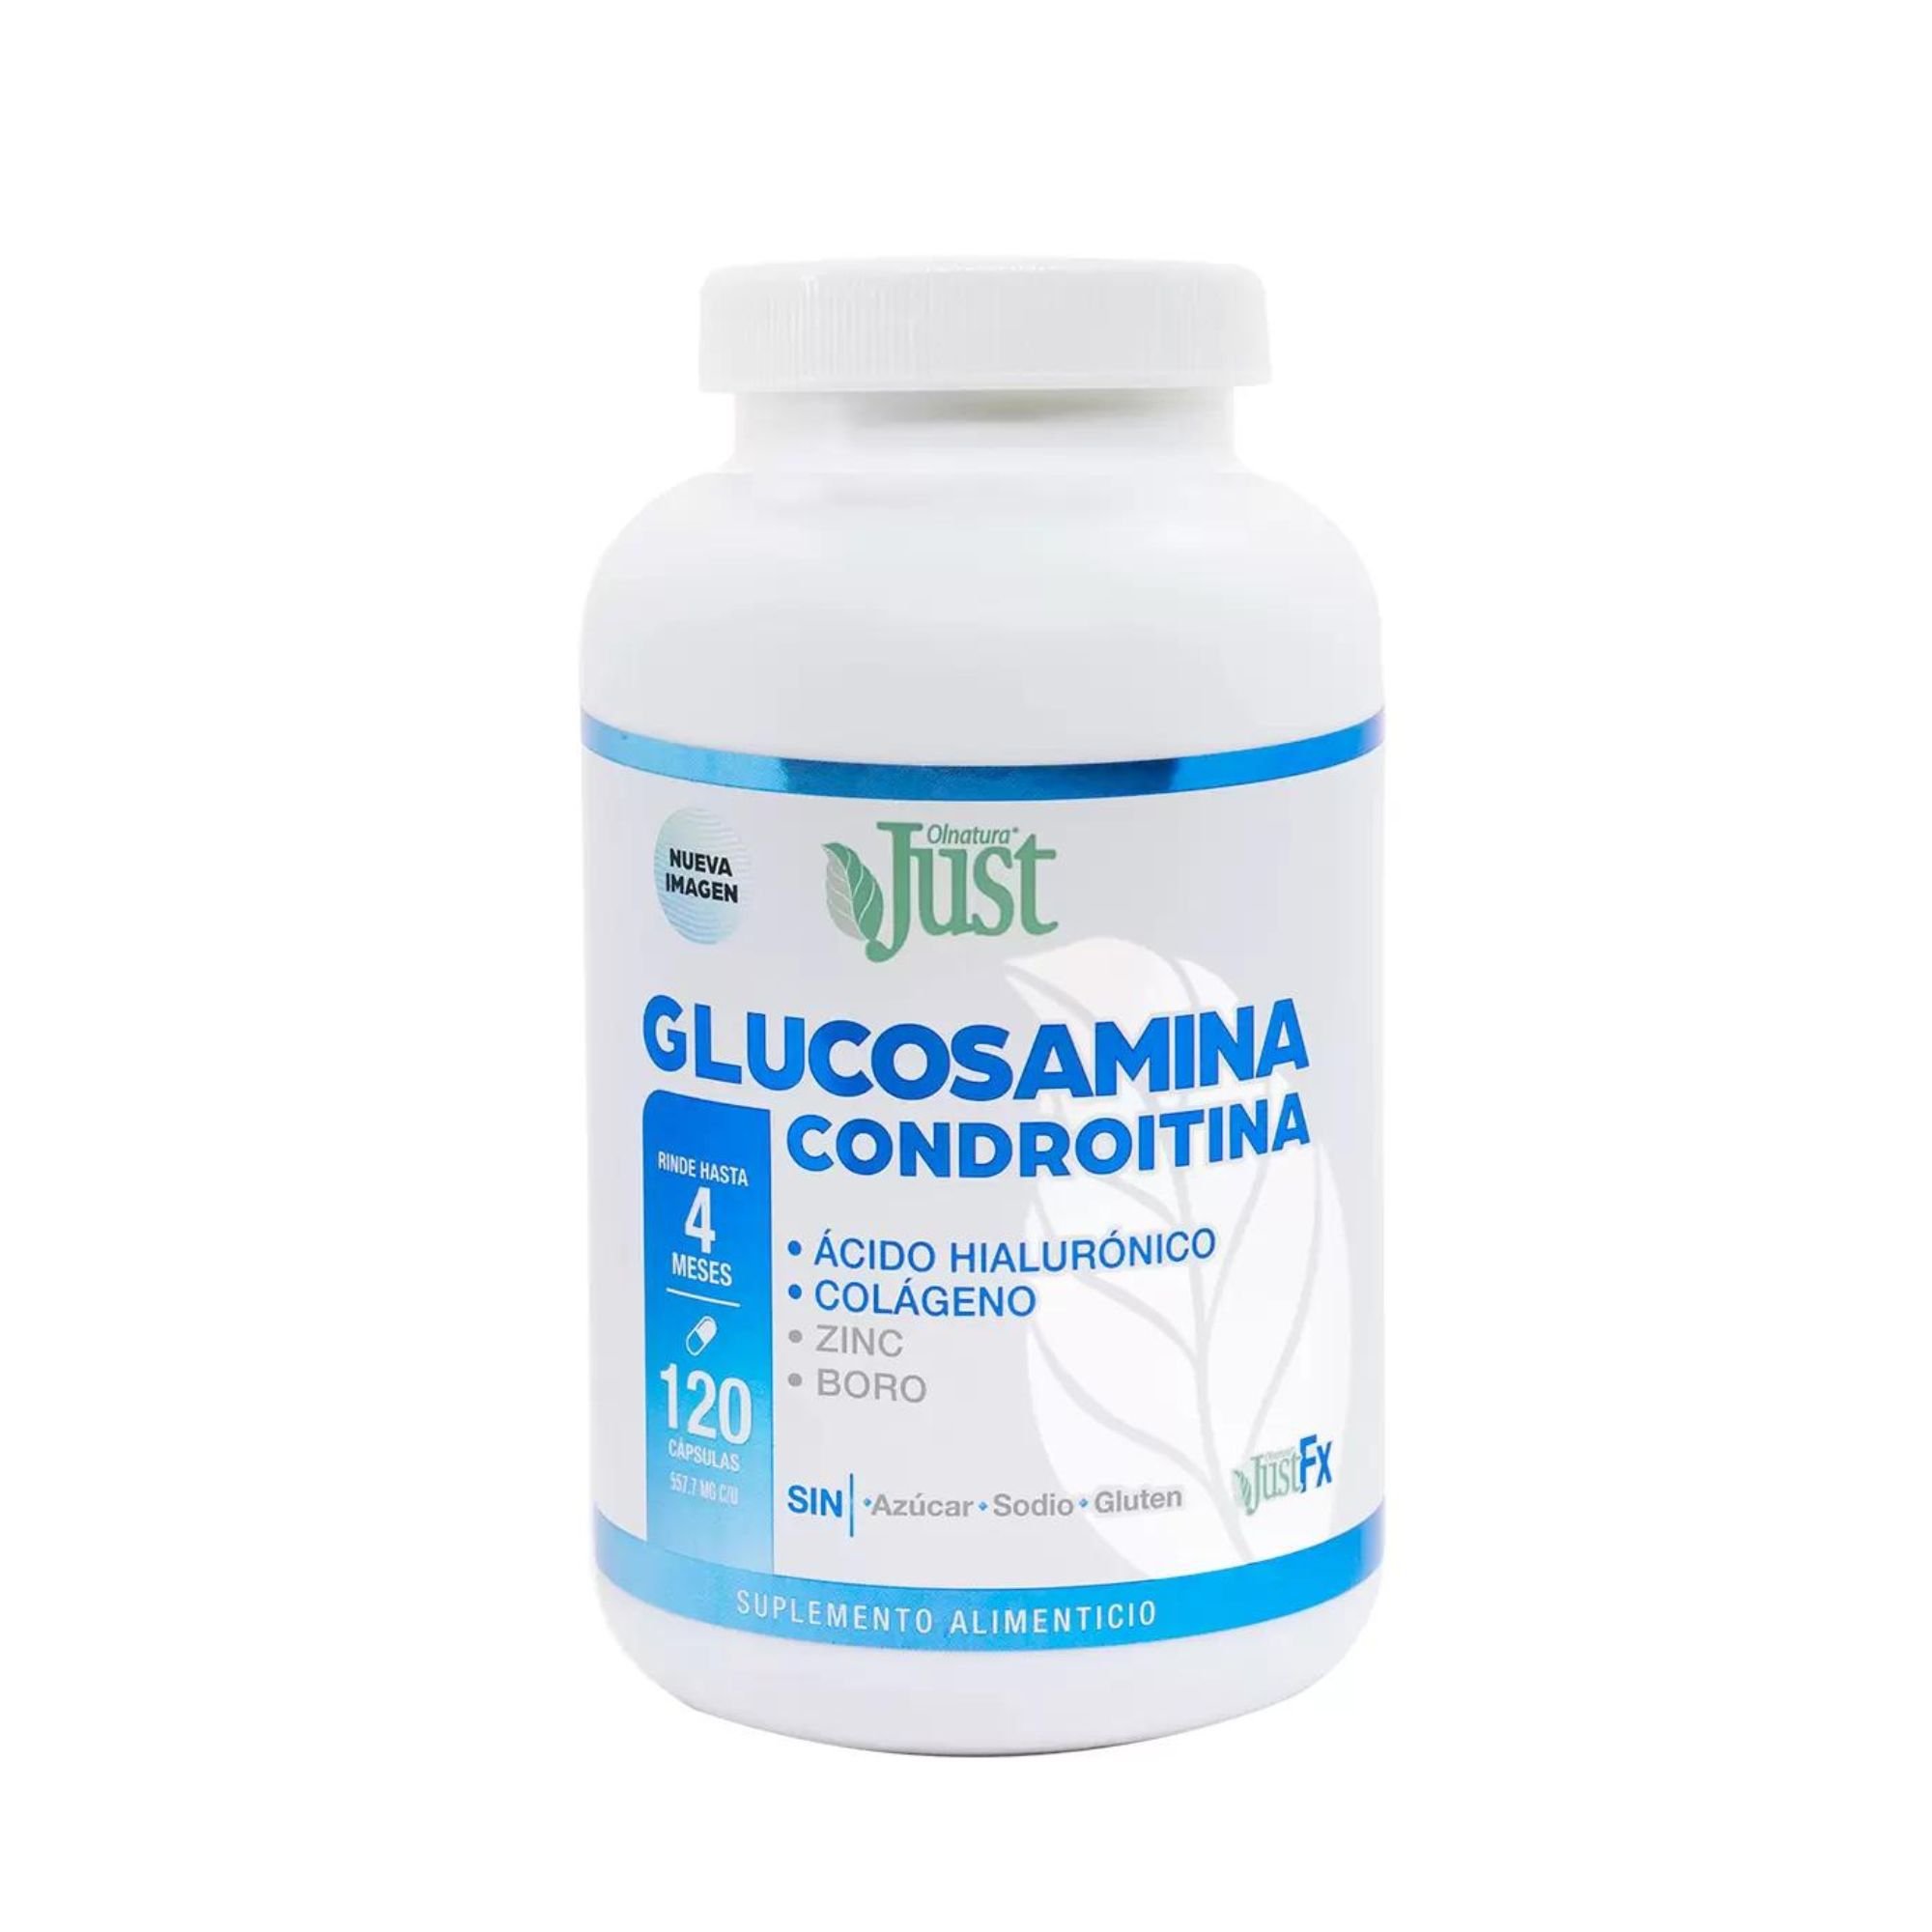 Just Glucosamina Condroitina 120 Caps Olnatura